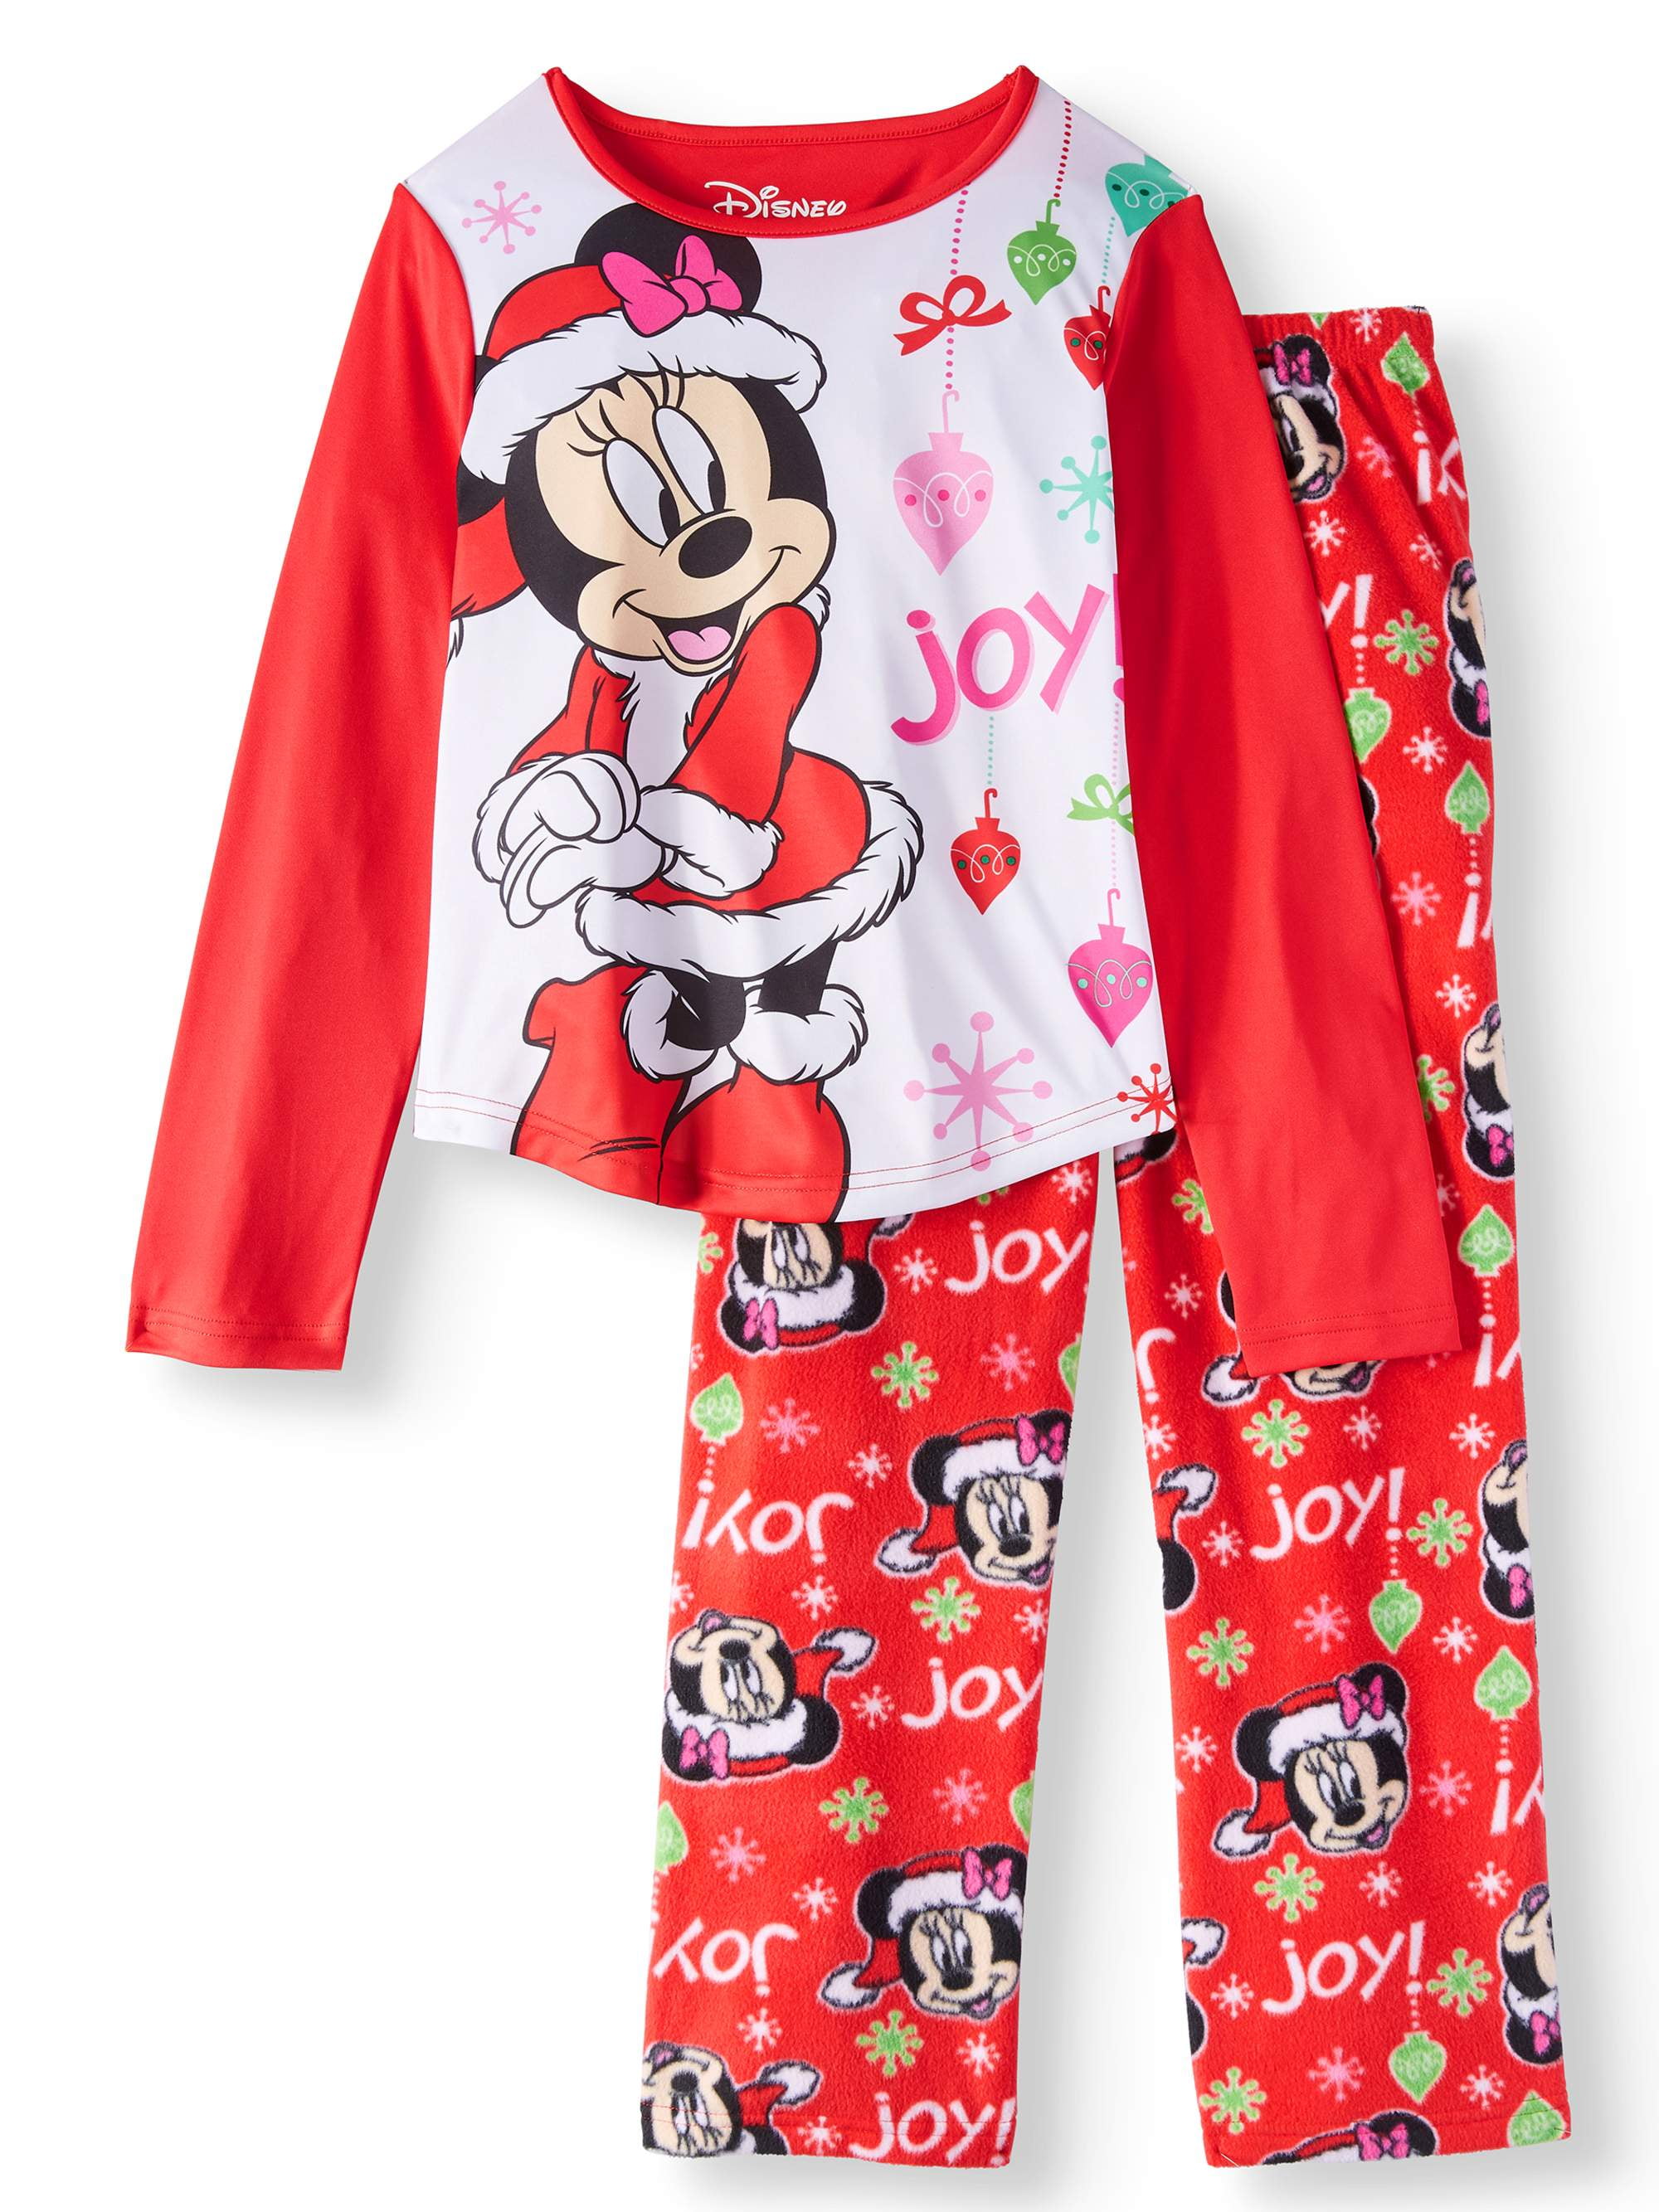 NEW Disney Store Christmas Holiday Minnie Mouse Pajama Set Sz 2 3 4 6 10 Girls